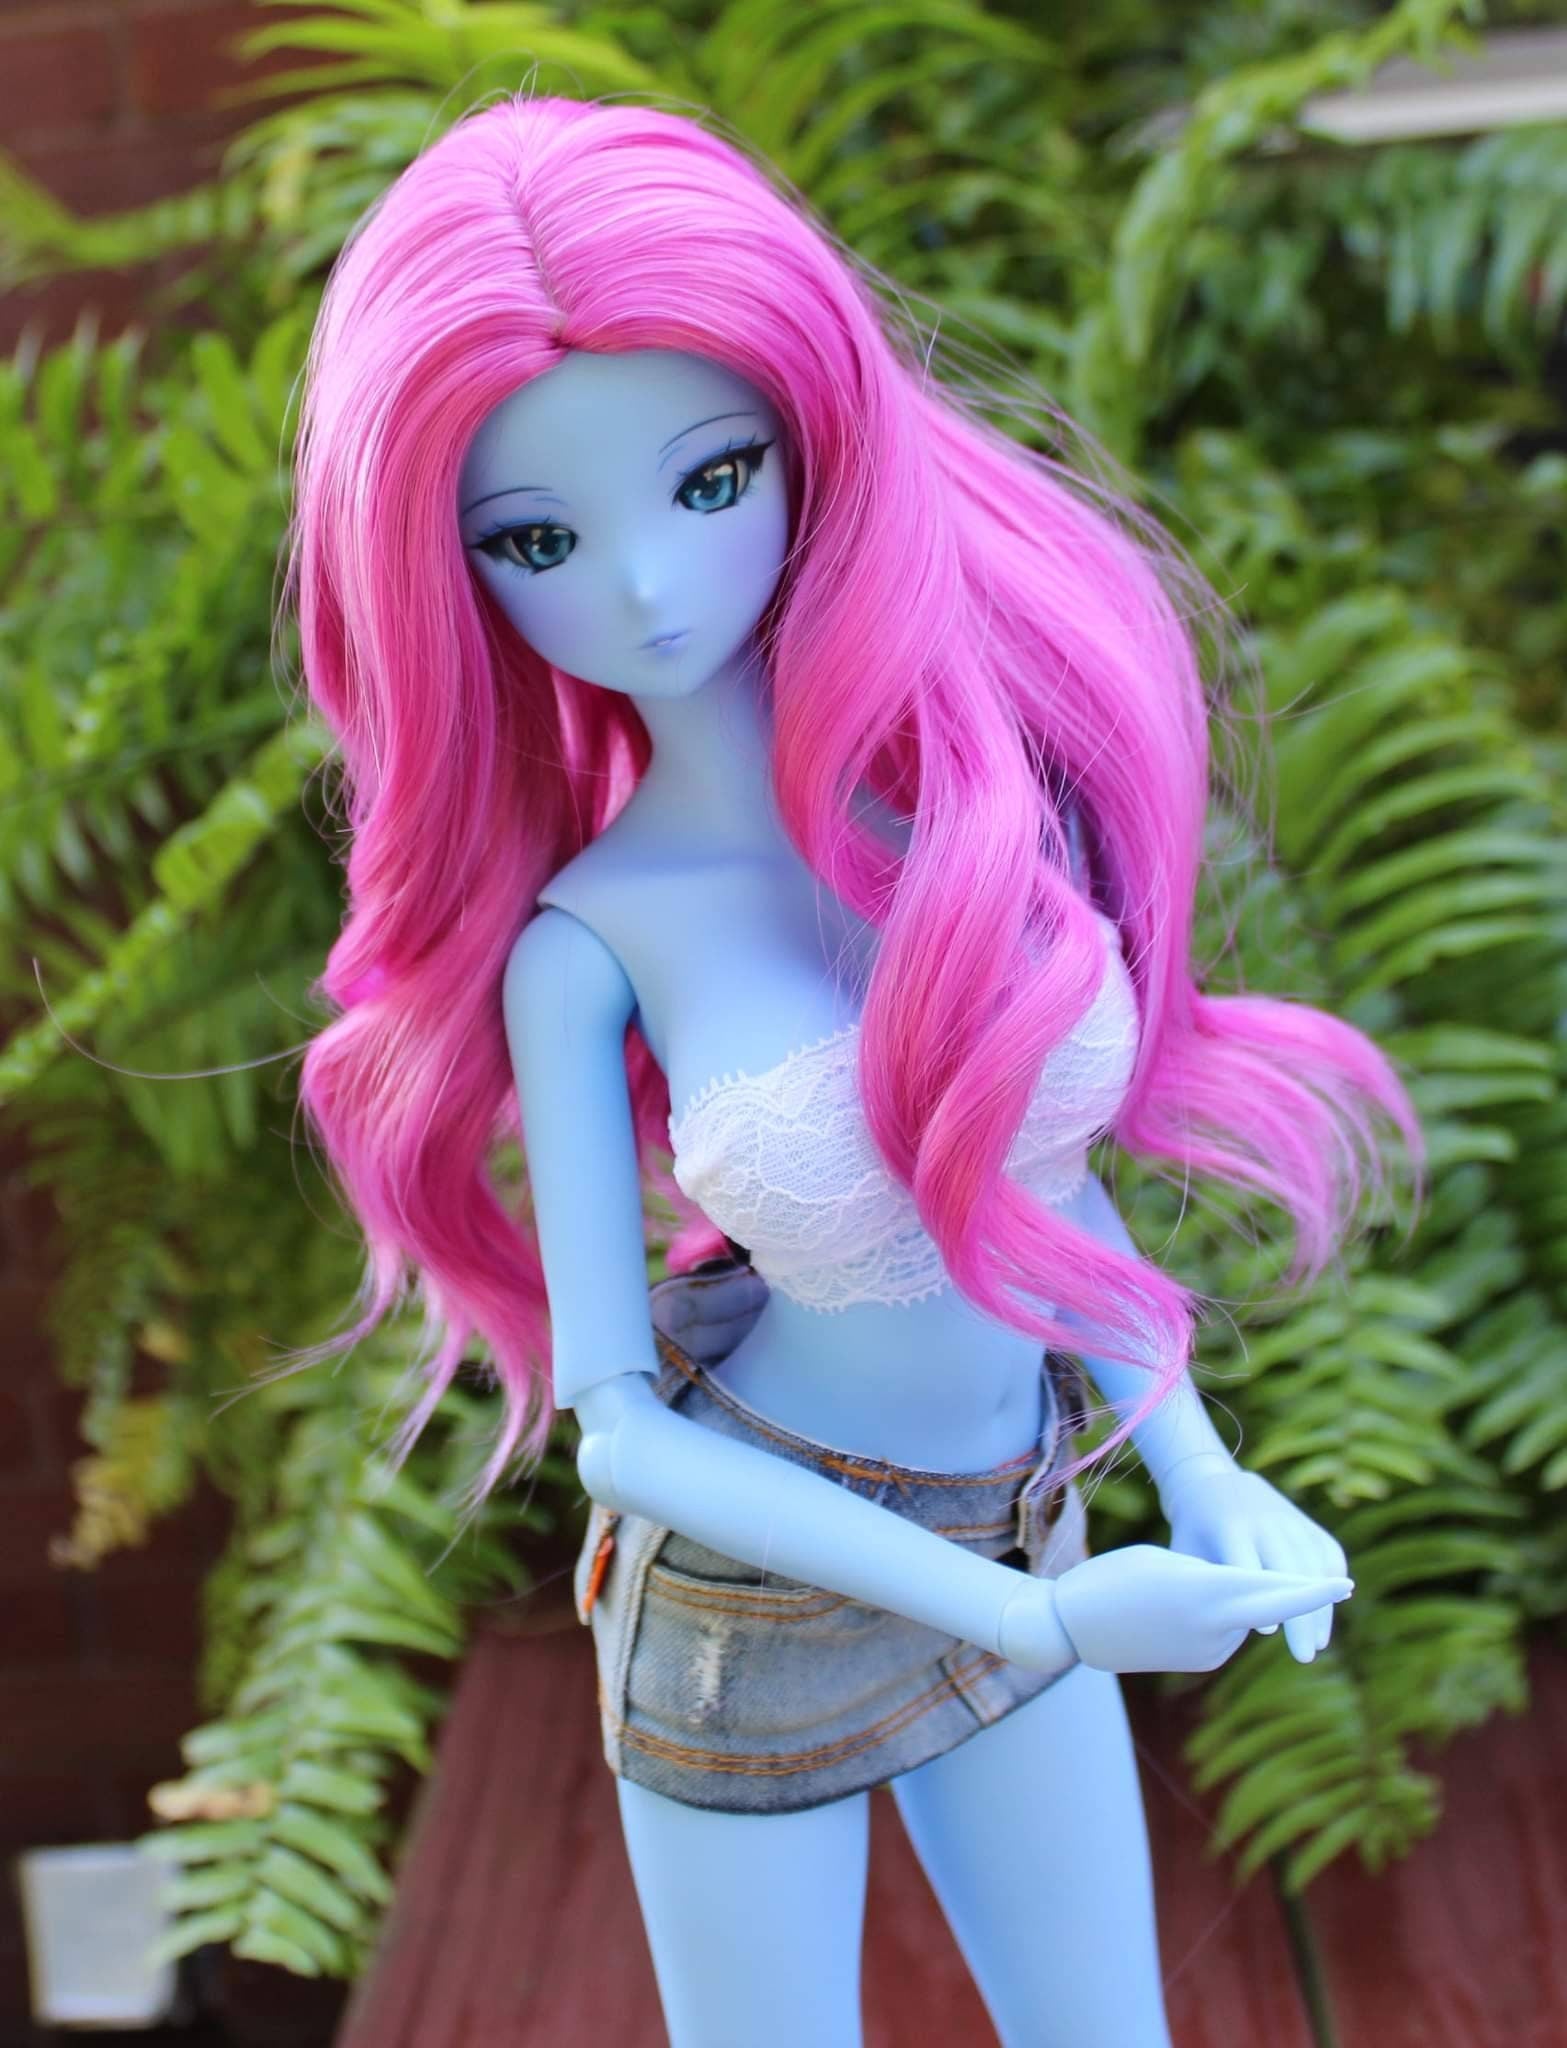 Custom doll WIG for Smart Dolls- Heat Safe - Tangle Resistant- 8.5" head size of Bjd, SD, Dollfie Dream dolls Pink